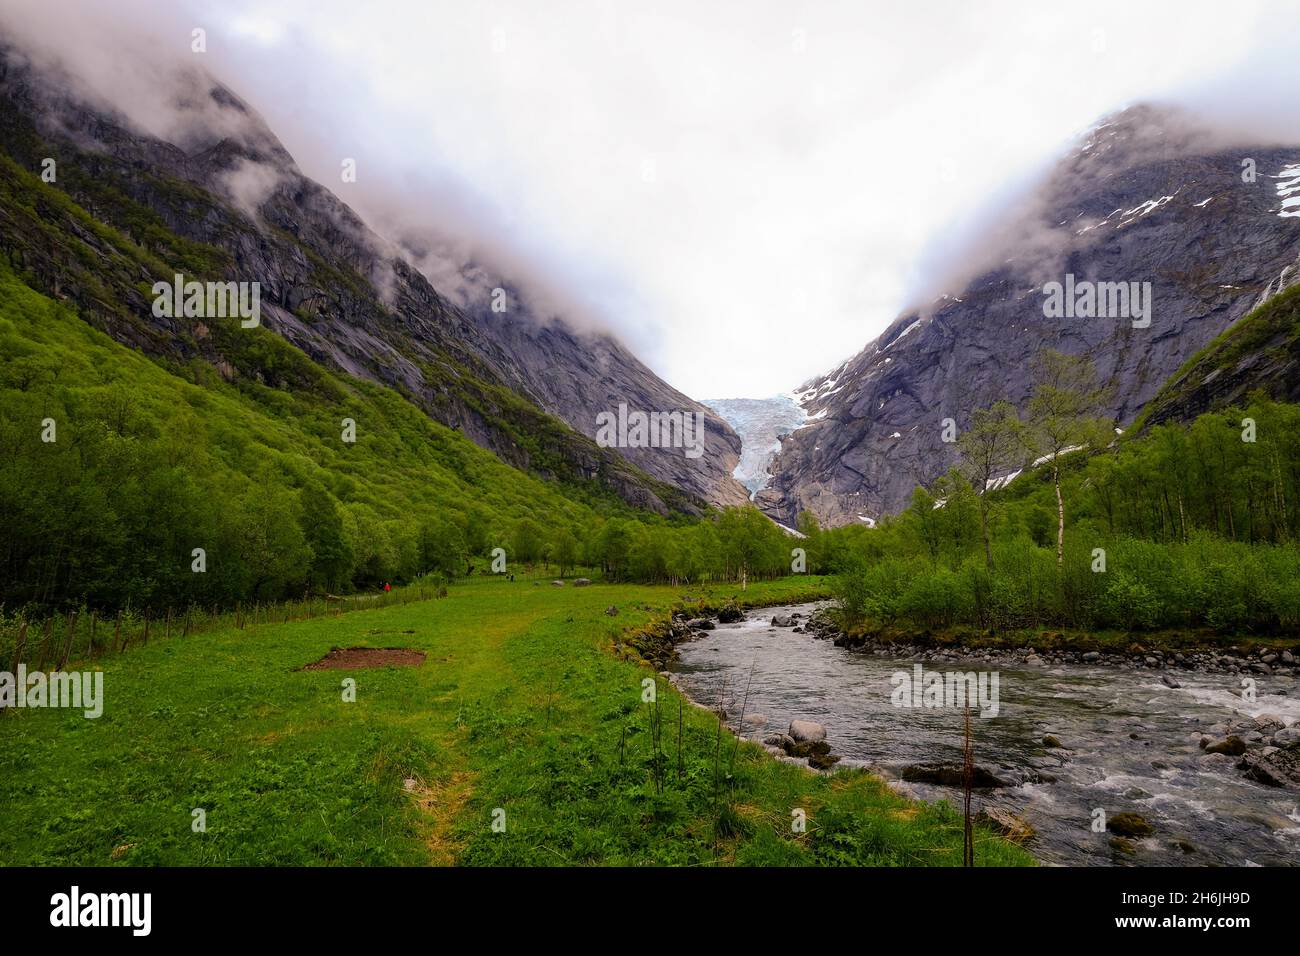 Dal ghiacciaio Briksdal scorre un torrente glaciale, Stryn, Vestland, Norvegia, Scandinavia, Europa Foto Stock